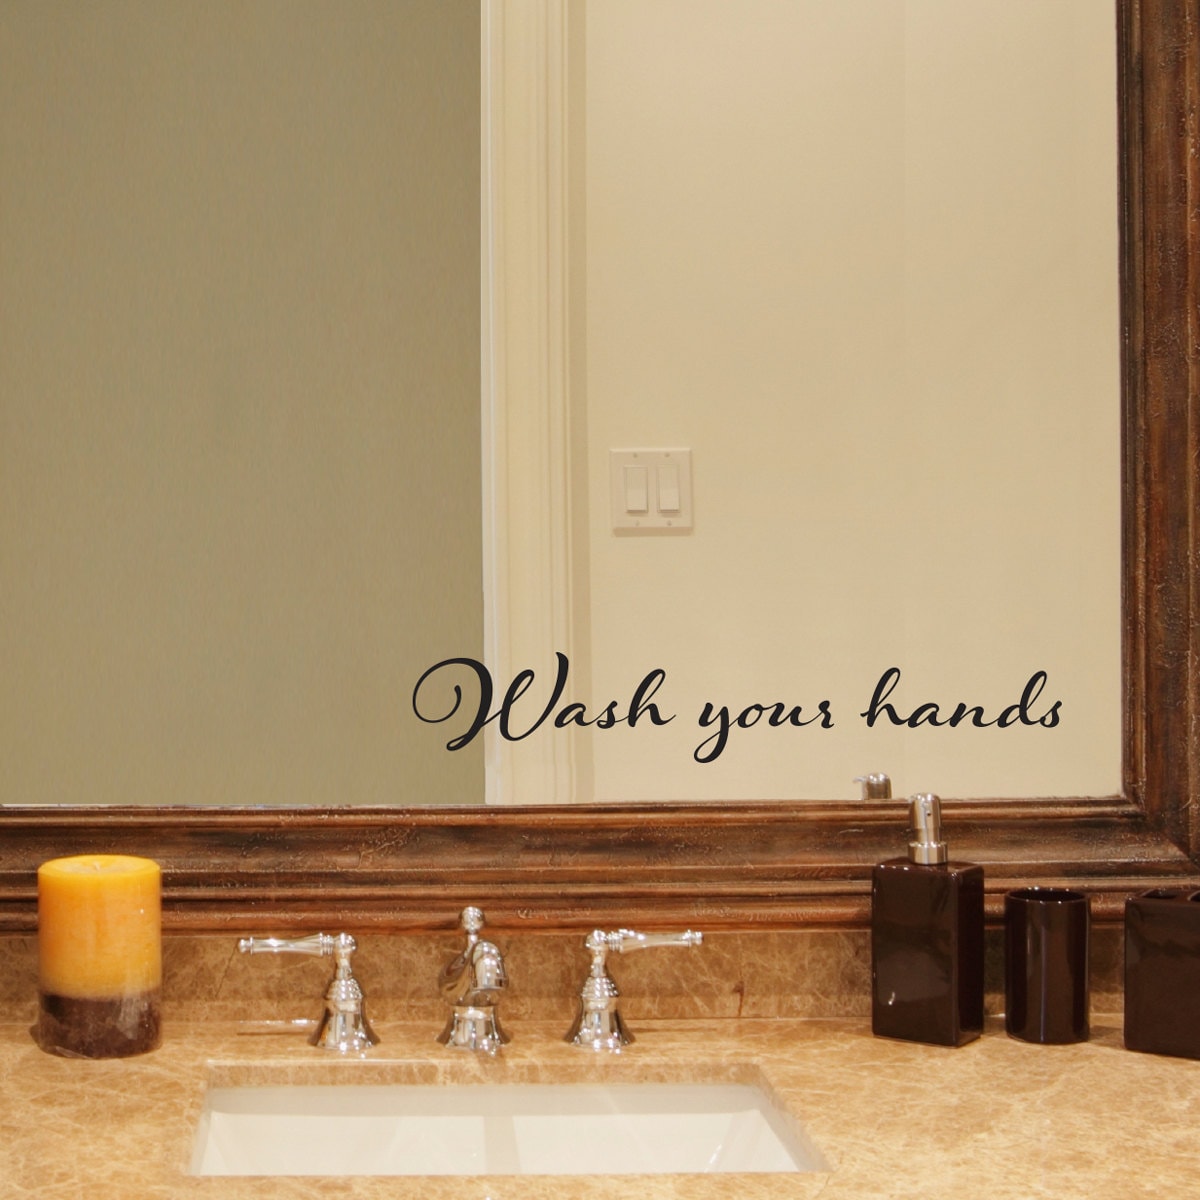 Wash your hands Decal - Bathroom Sticker - Mirror decal